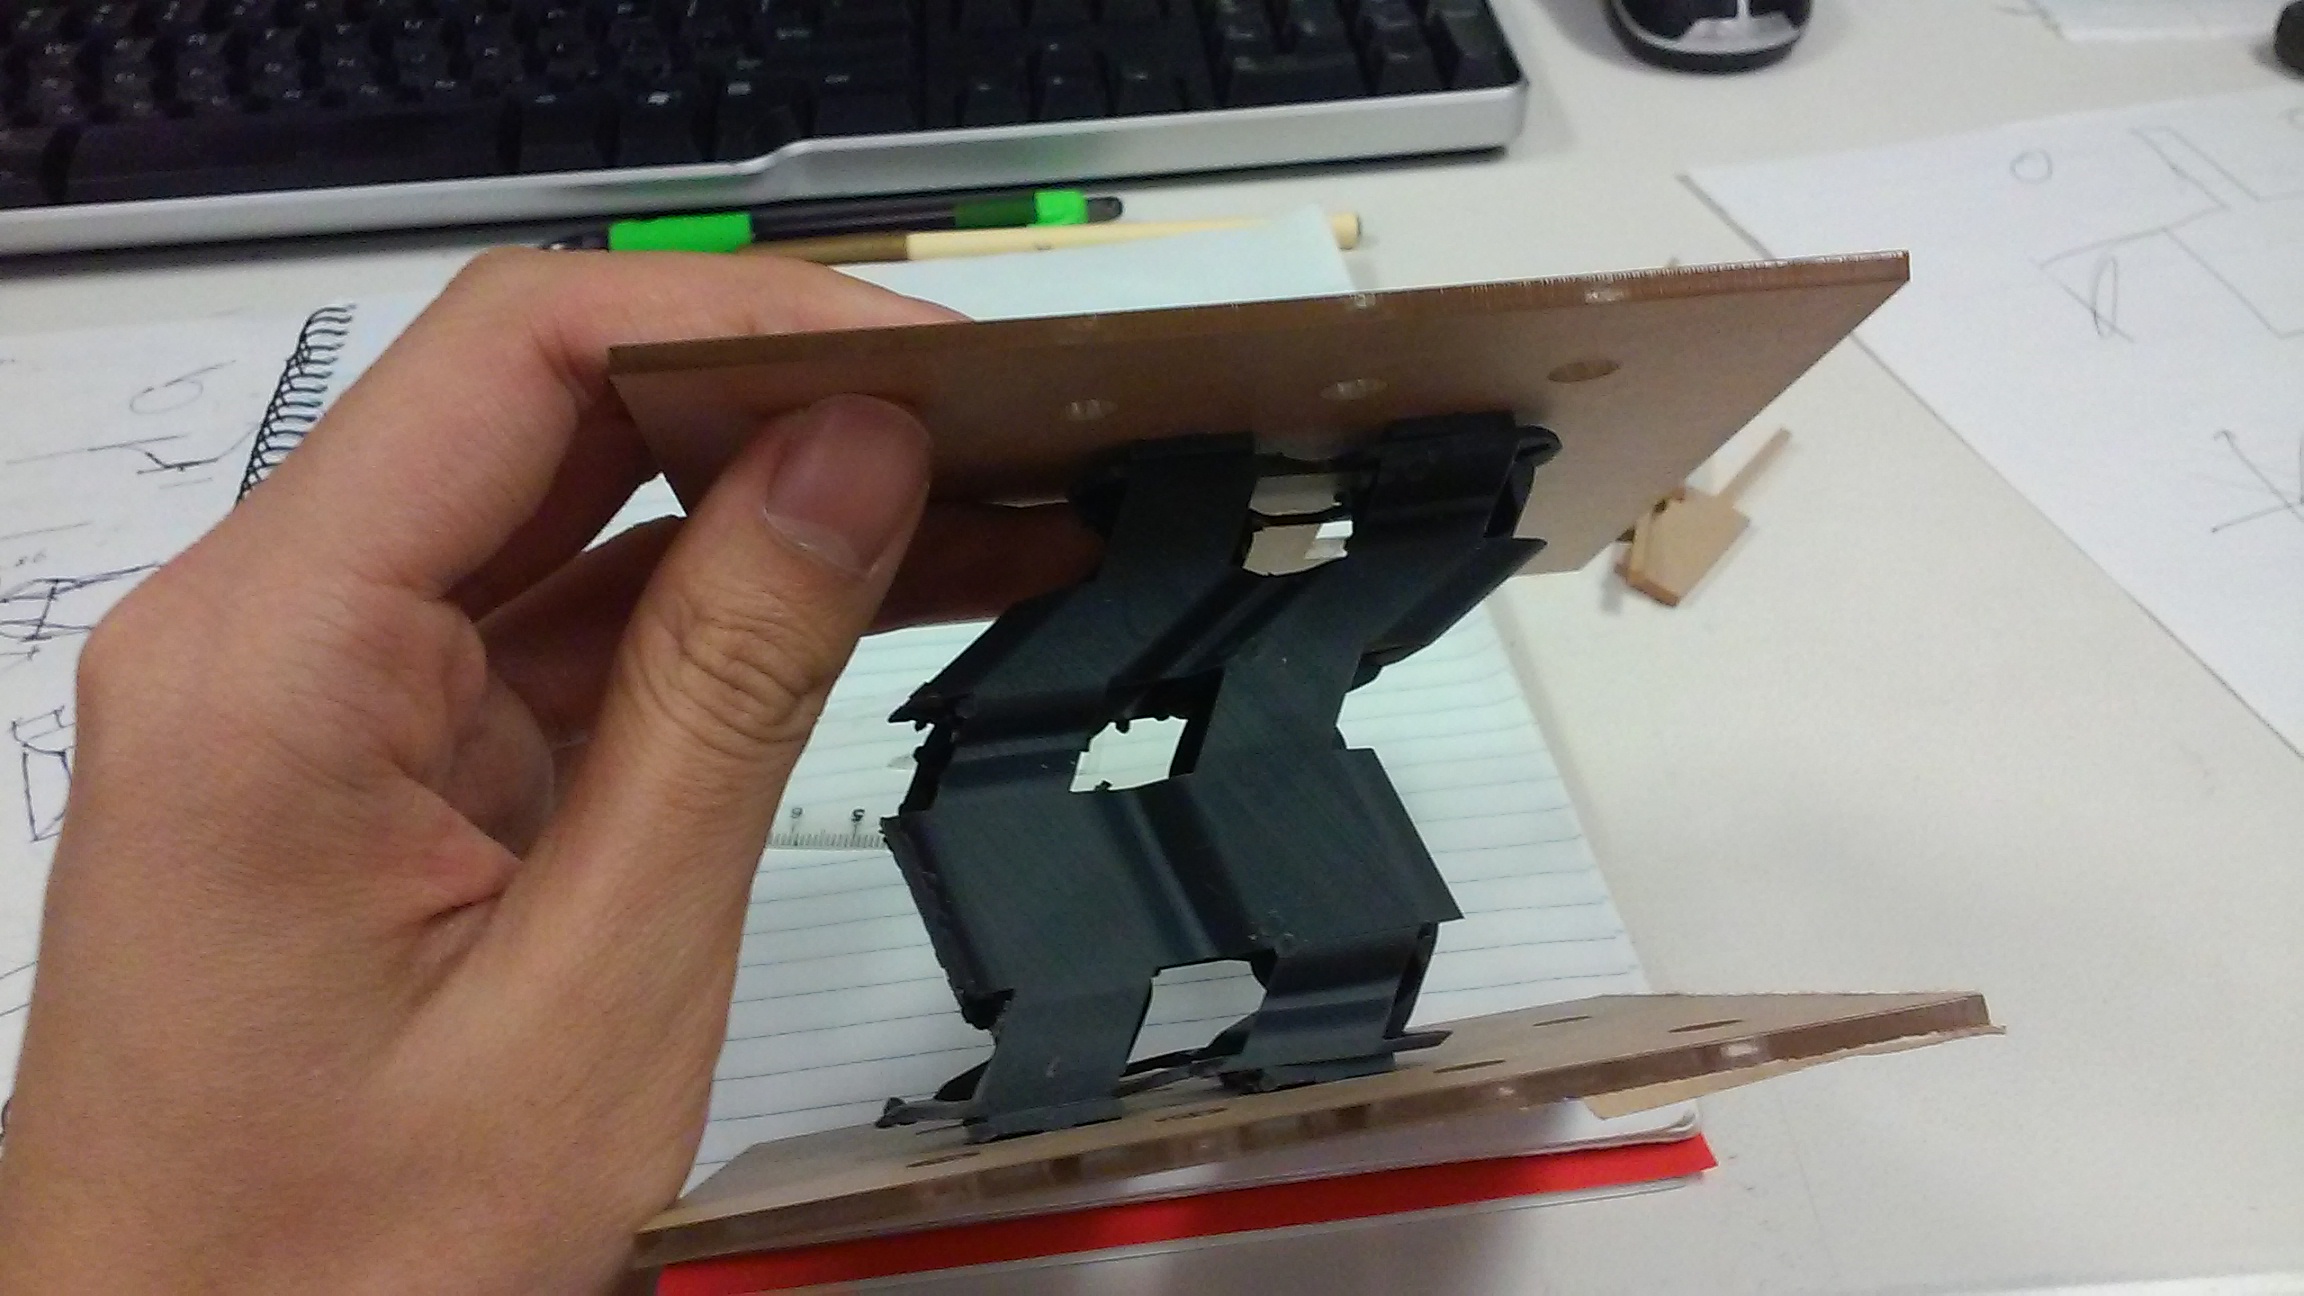 "3D-printed Self-Locking Origami Metamaterials with Piecewise Stiffness"